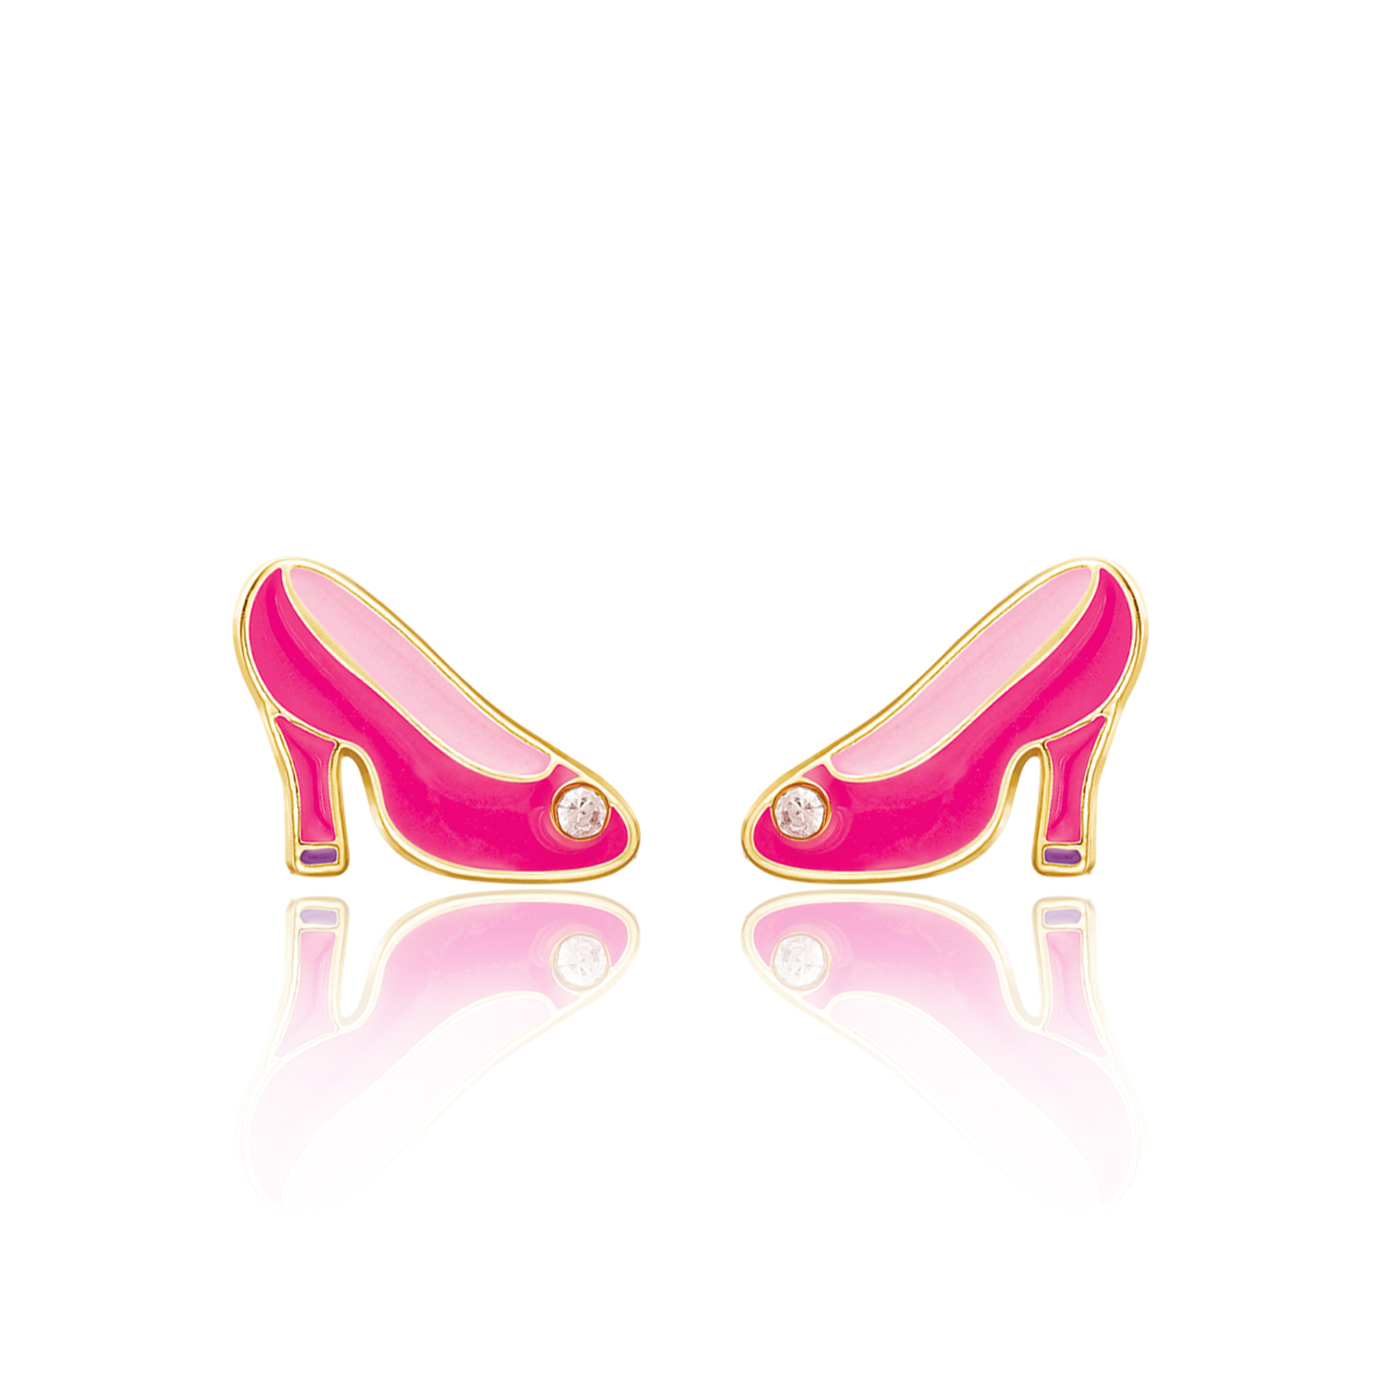  Girl Nation Küpe - Hot Pink Heels